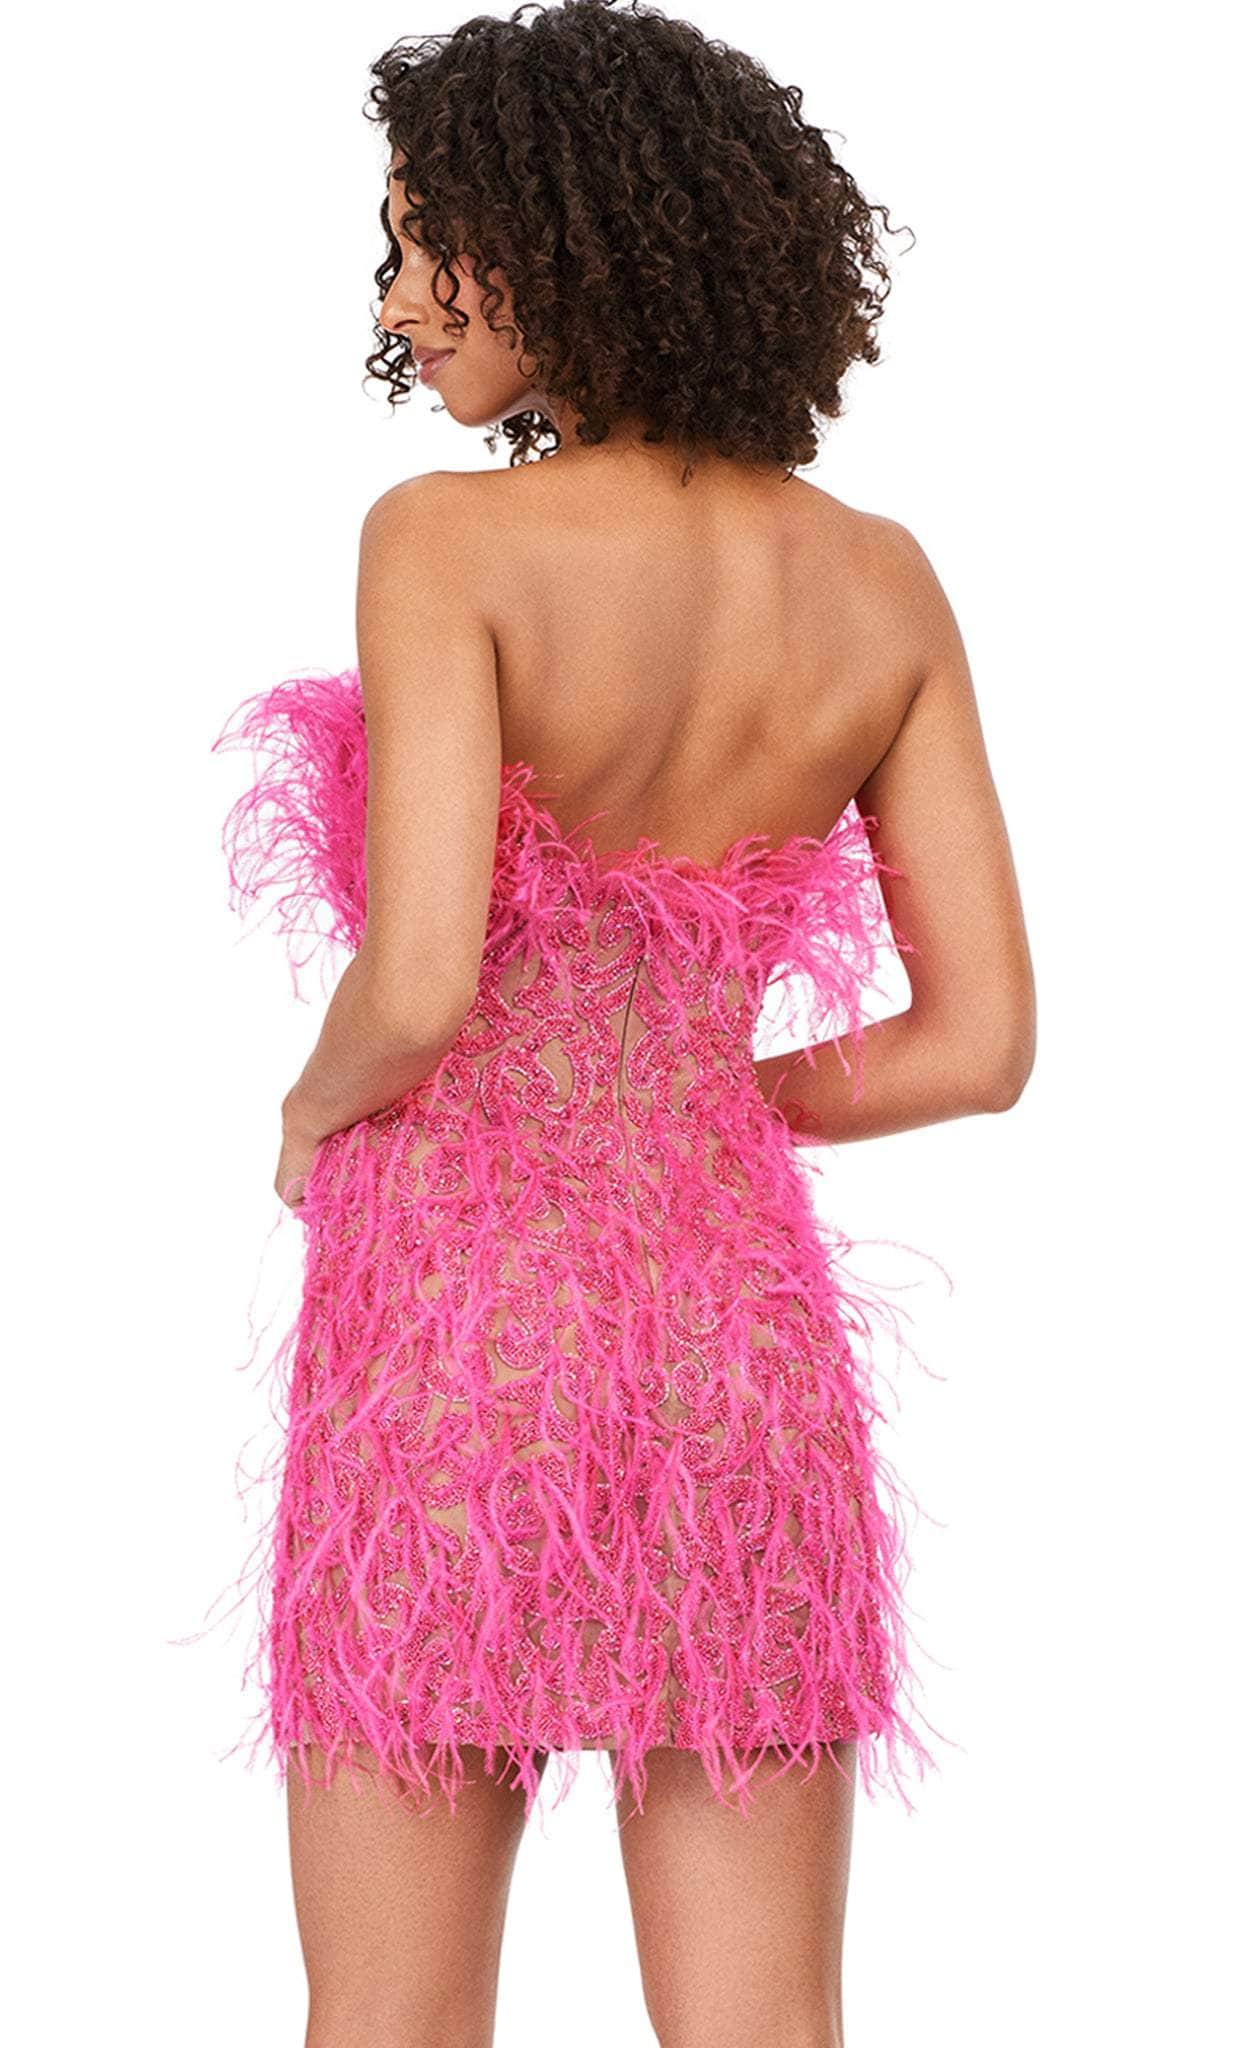 ashley lauren 4615 - feathered dress